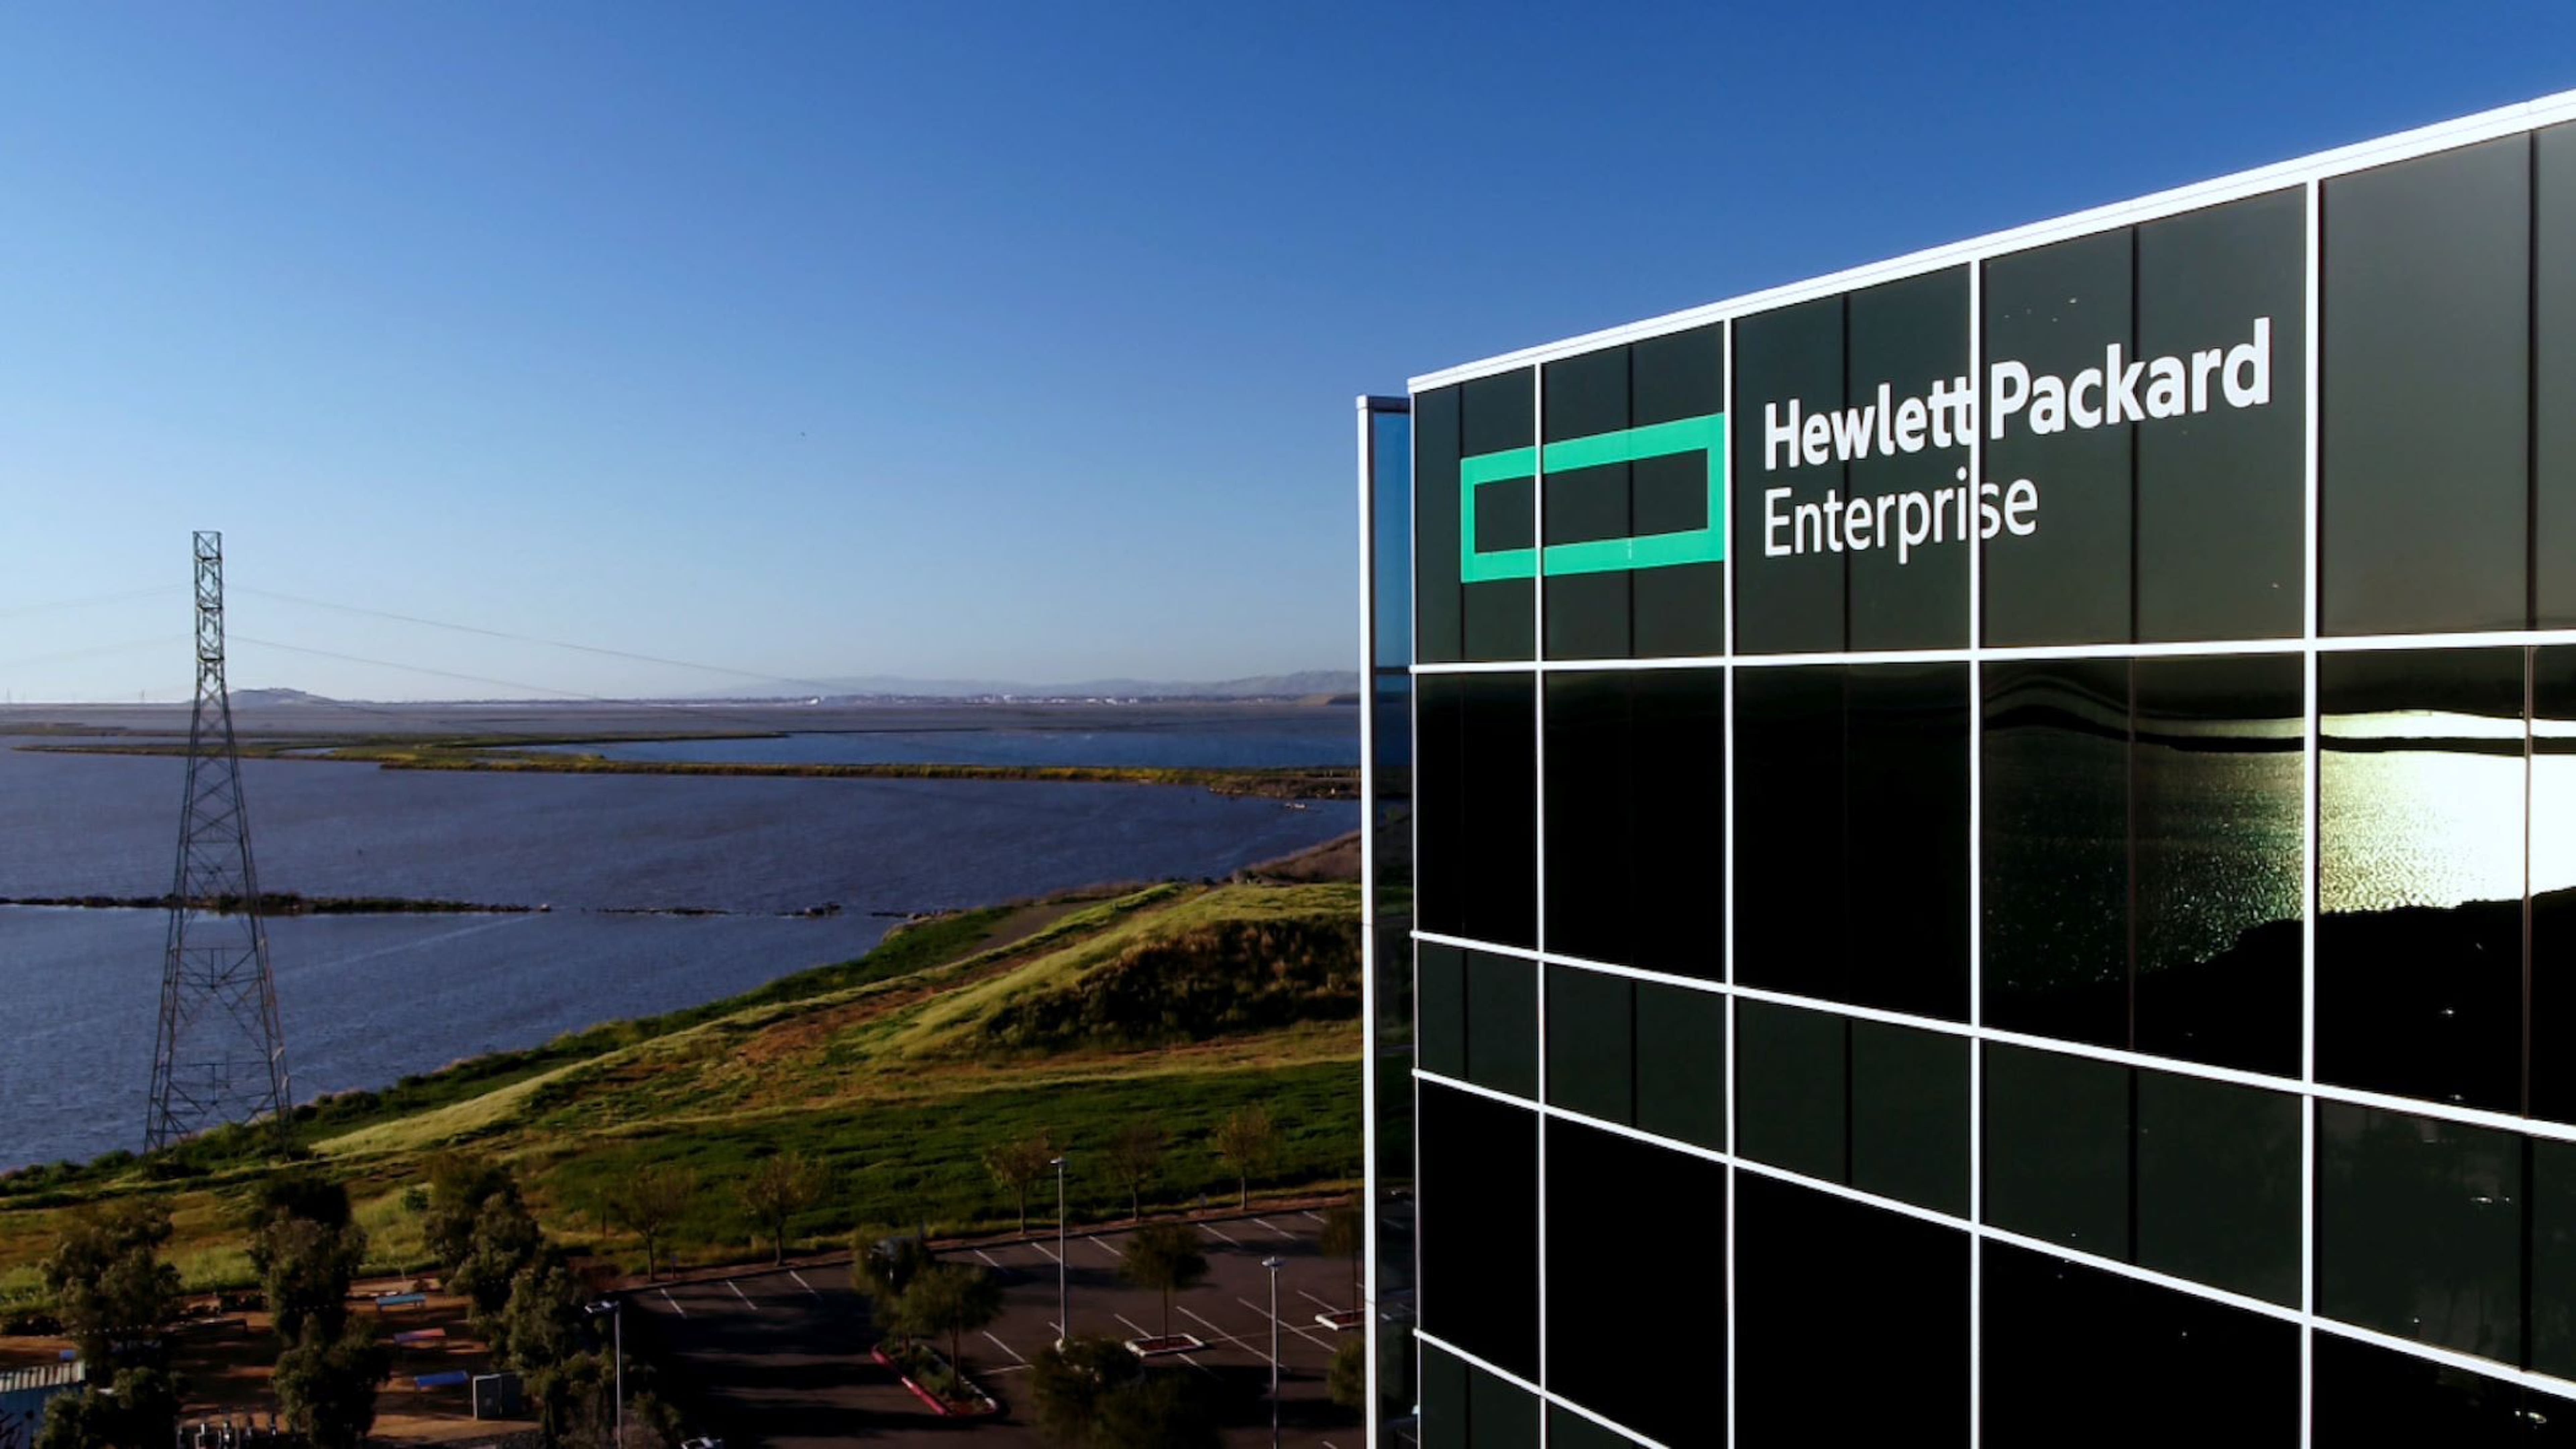 JPMorgan Upgrades Hewlett Packard Enterprise On Valuation